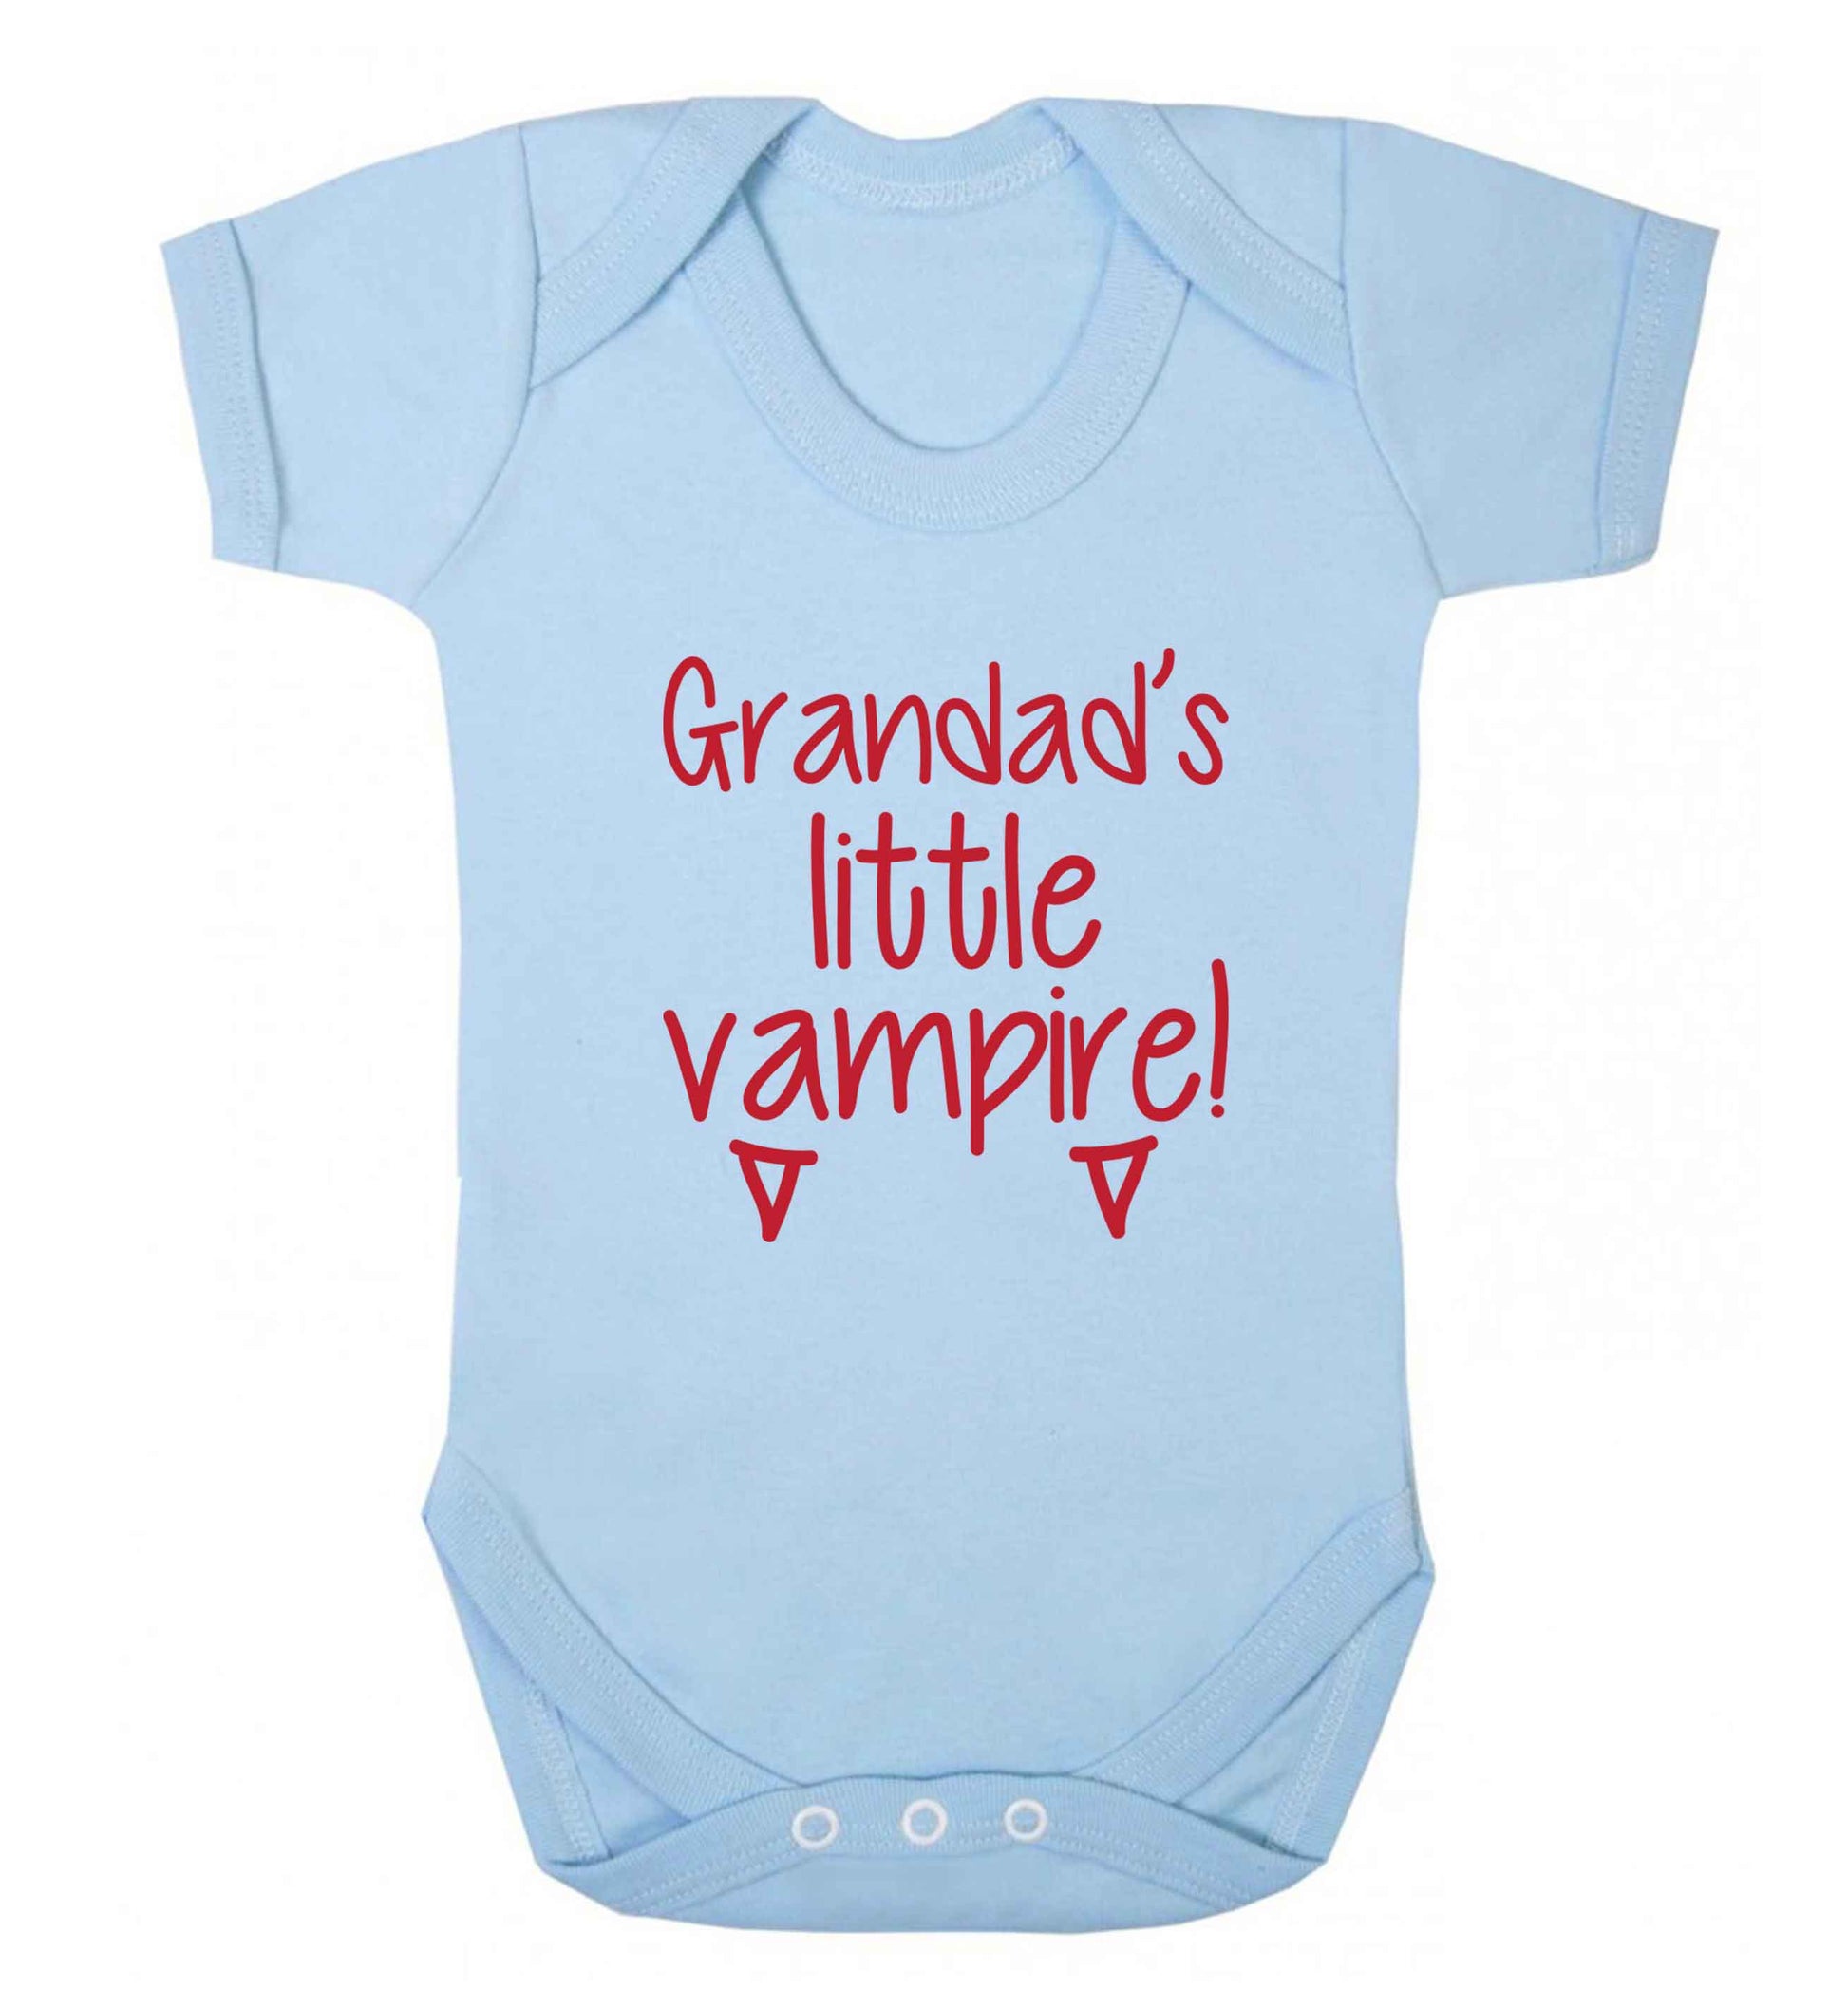 Grandad's little vampire baby vest pale blue 18-24 months